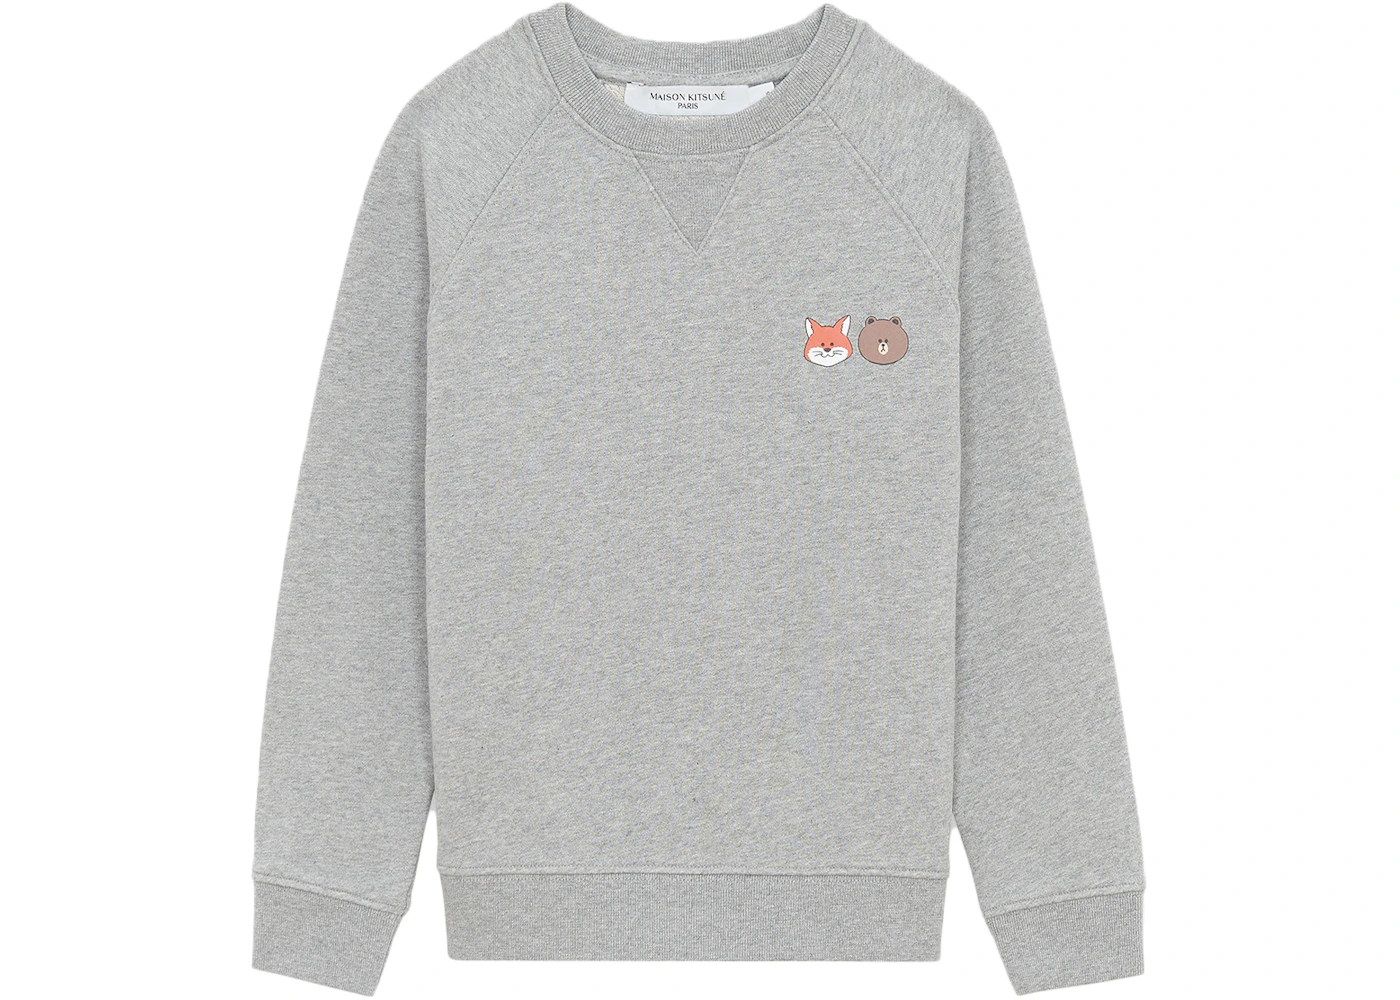 Maison Kitsune x Line Small Print Sweatshirt Grey Melange Kids' - SS21 - US